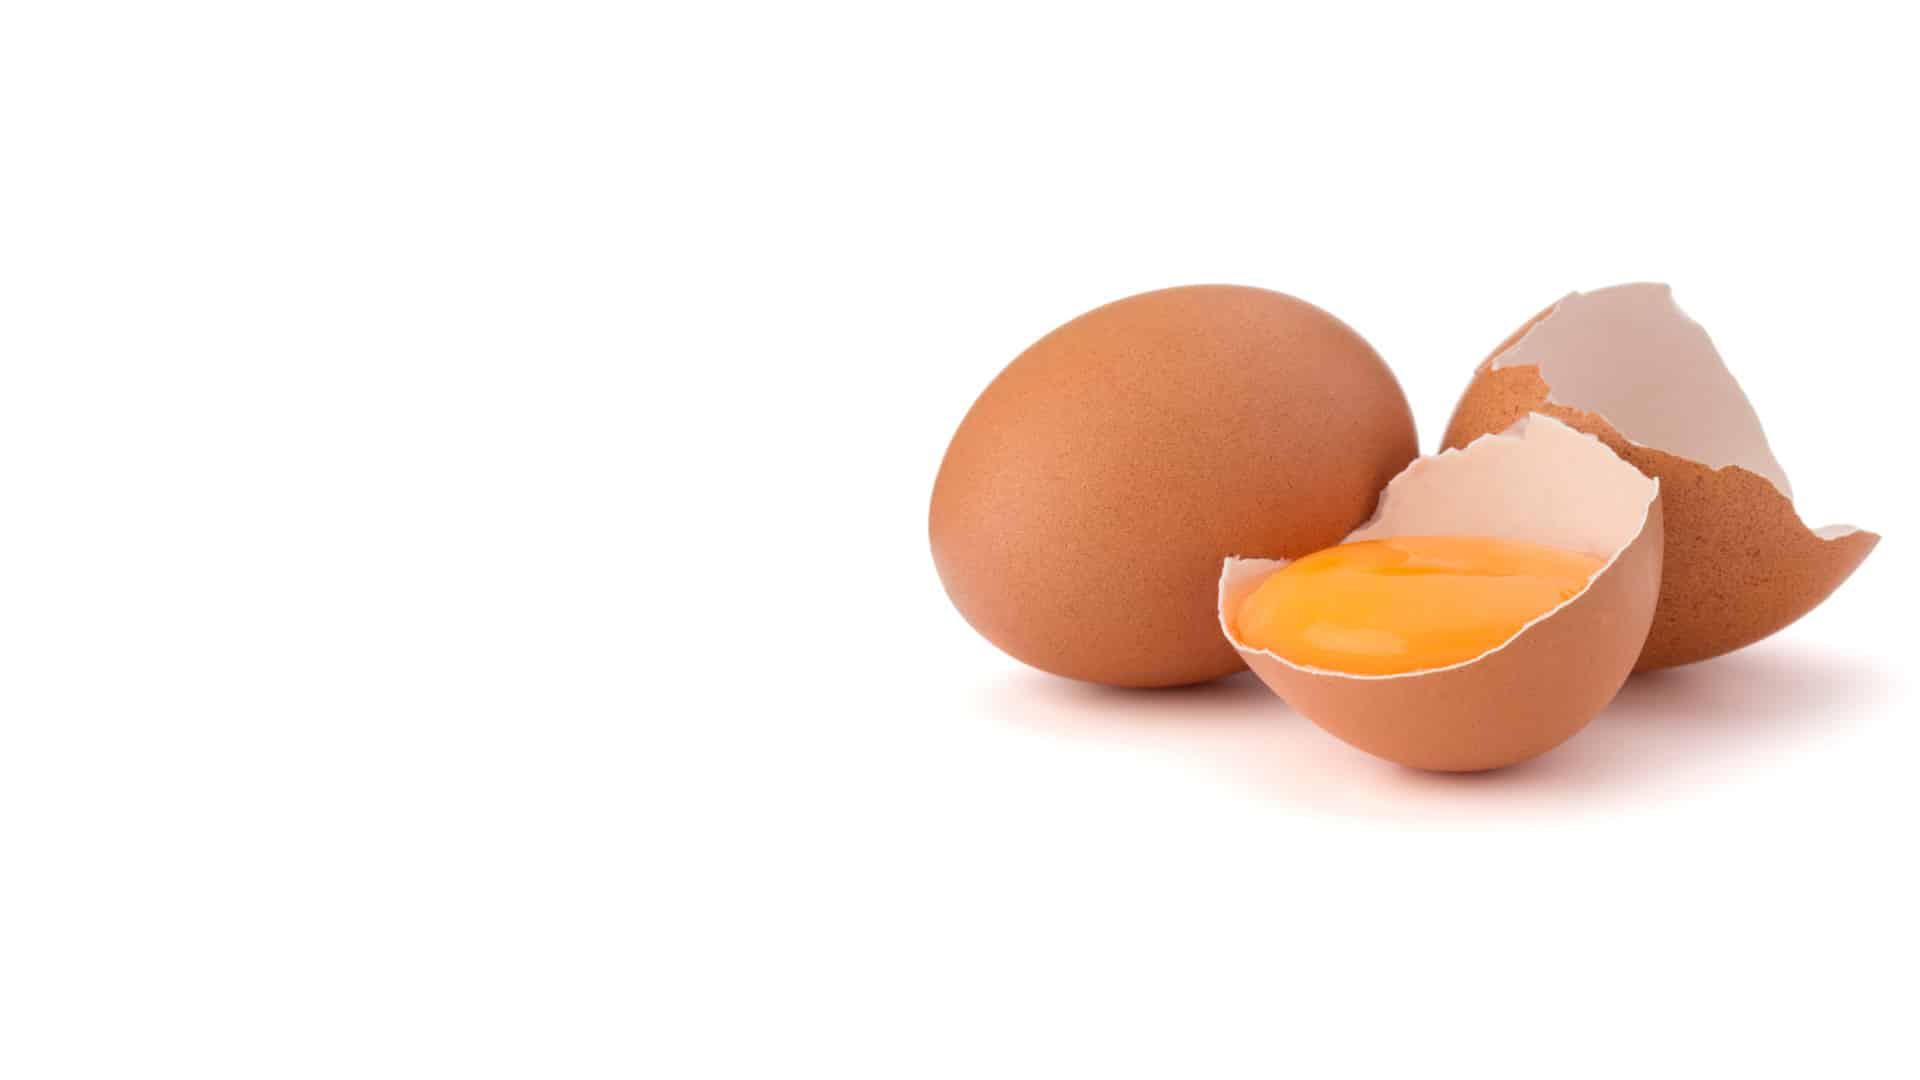 bigstock-Broken-egg-in-eggshell-half-an-157960931-kh